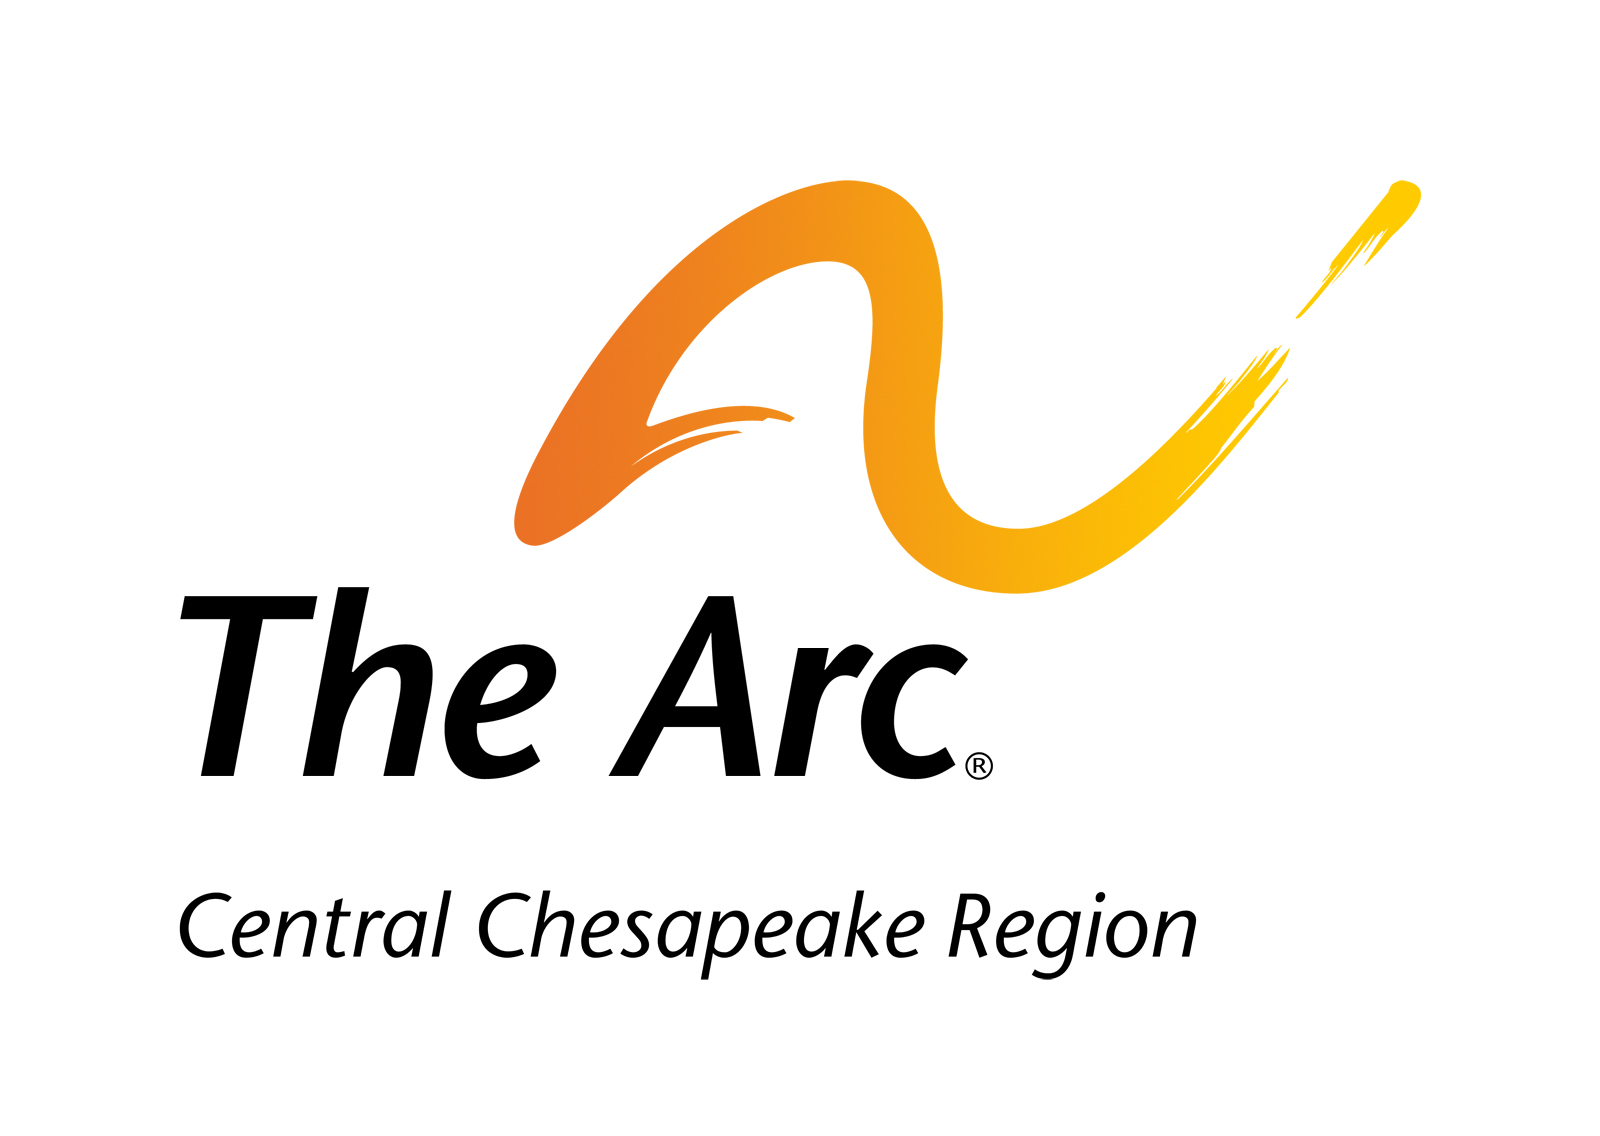 The Arc Central Chesapeake Region